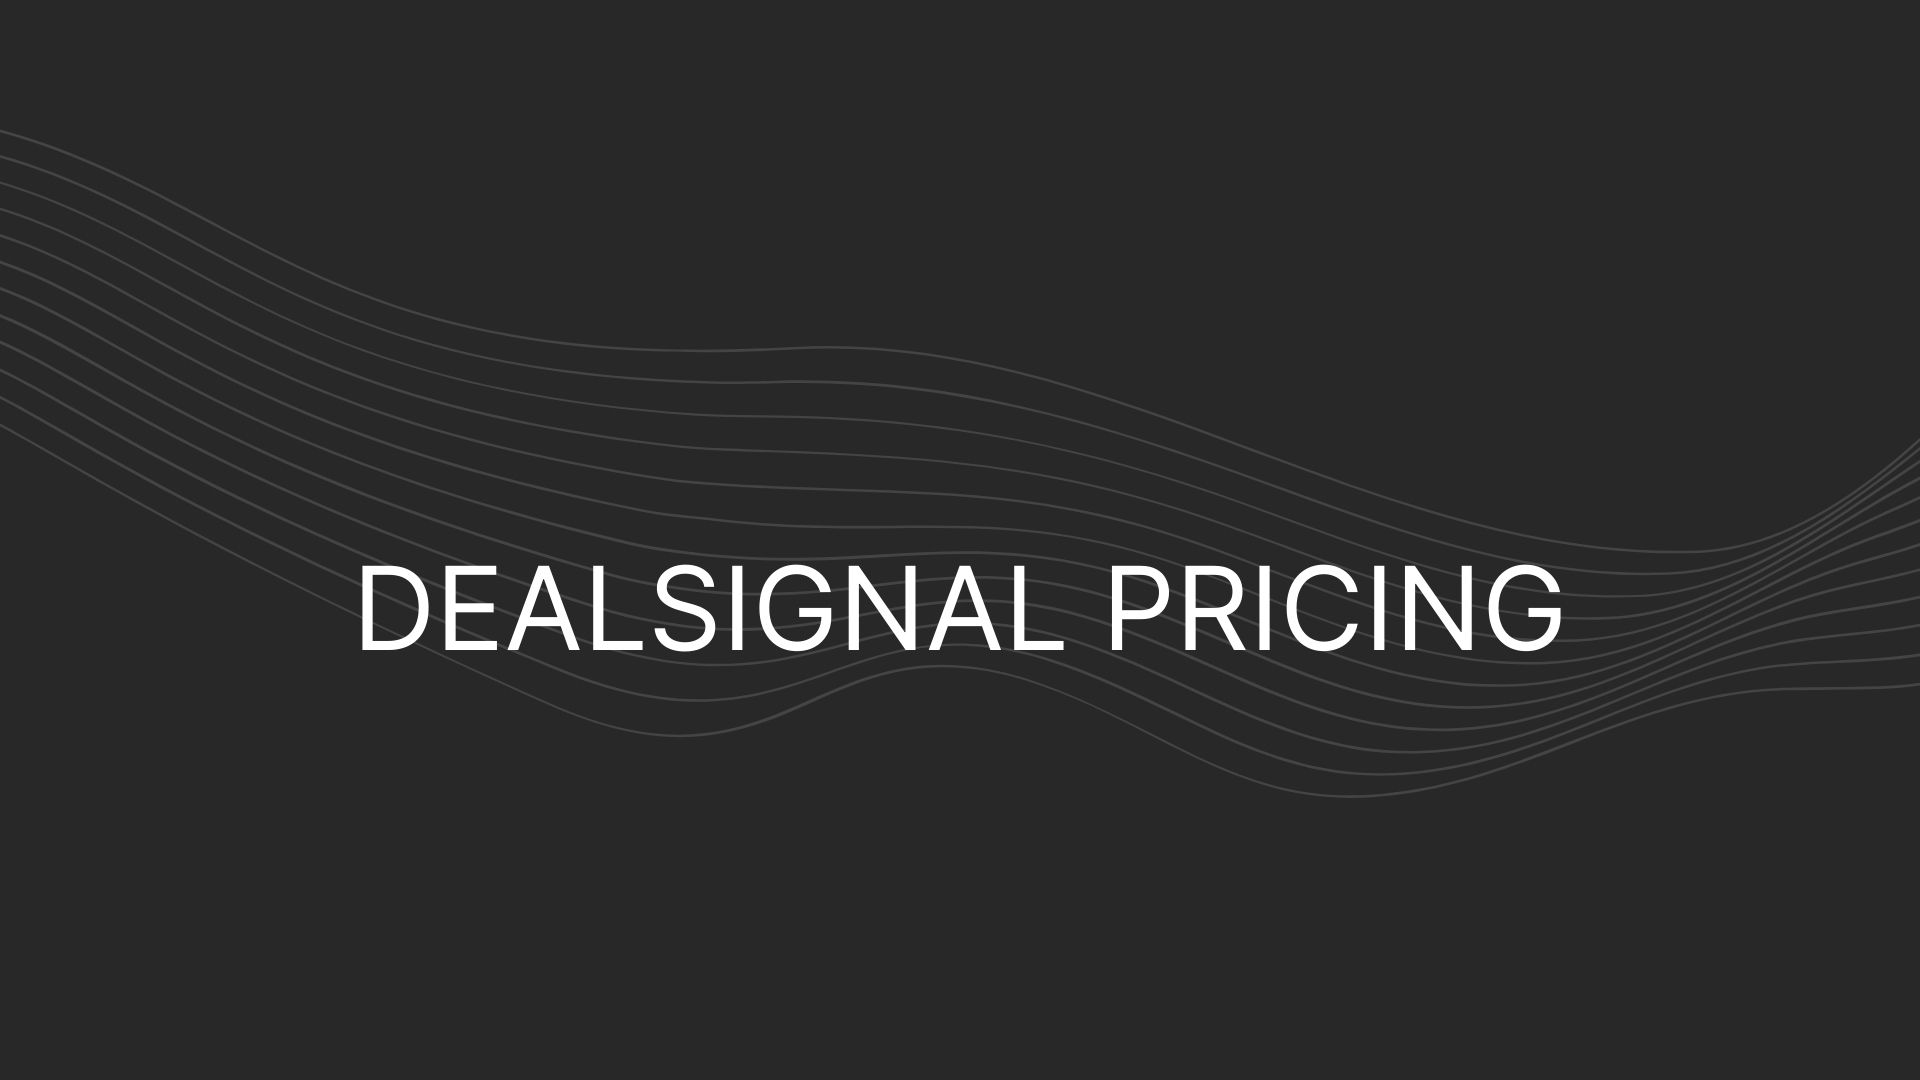 DealSignal Pricing